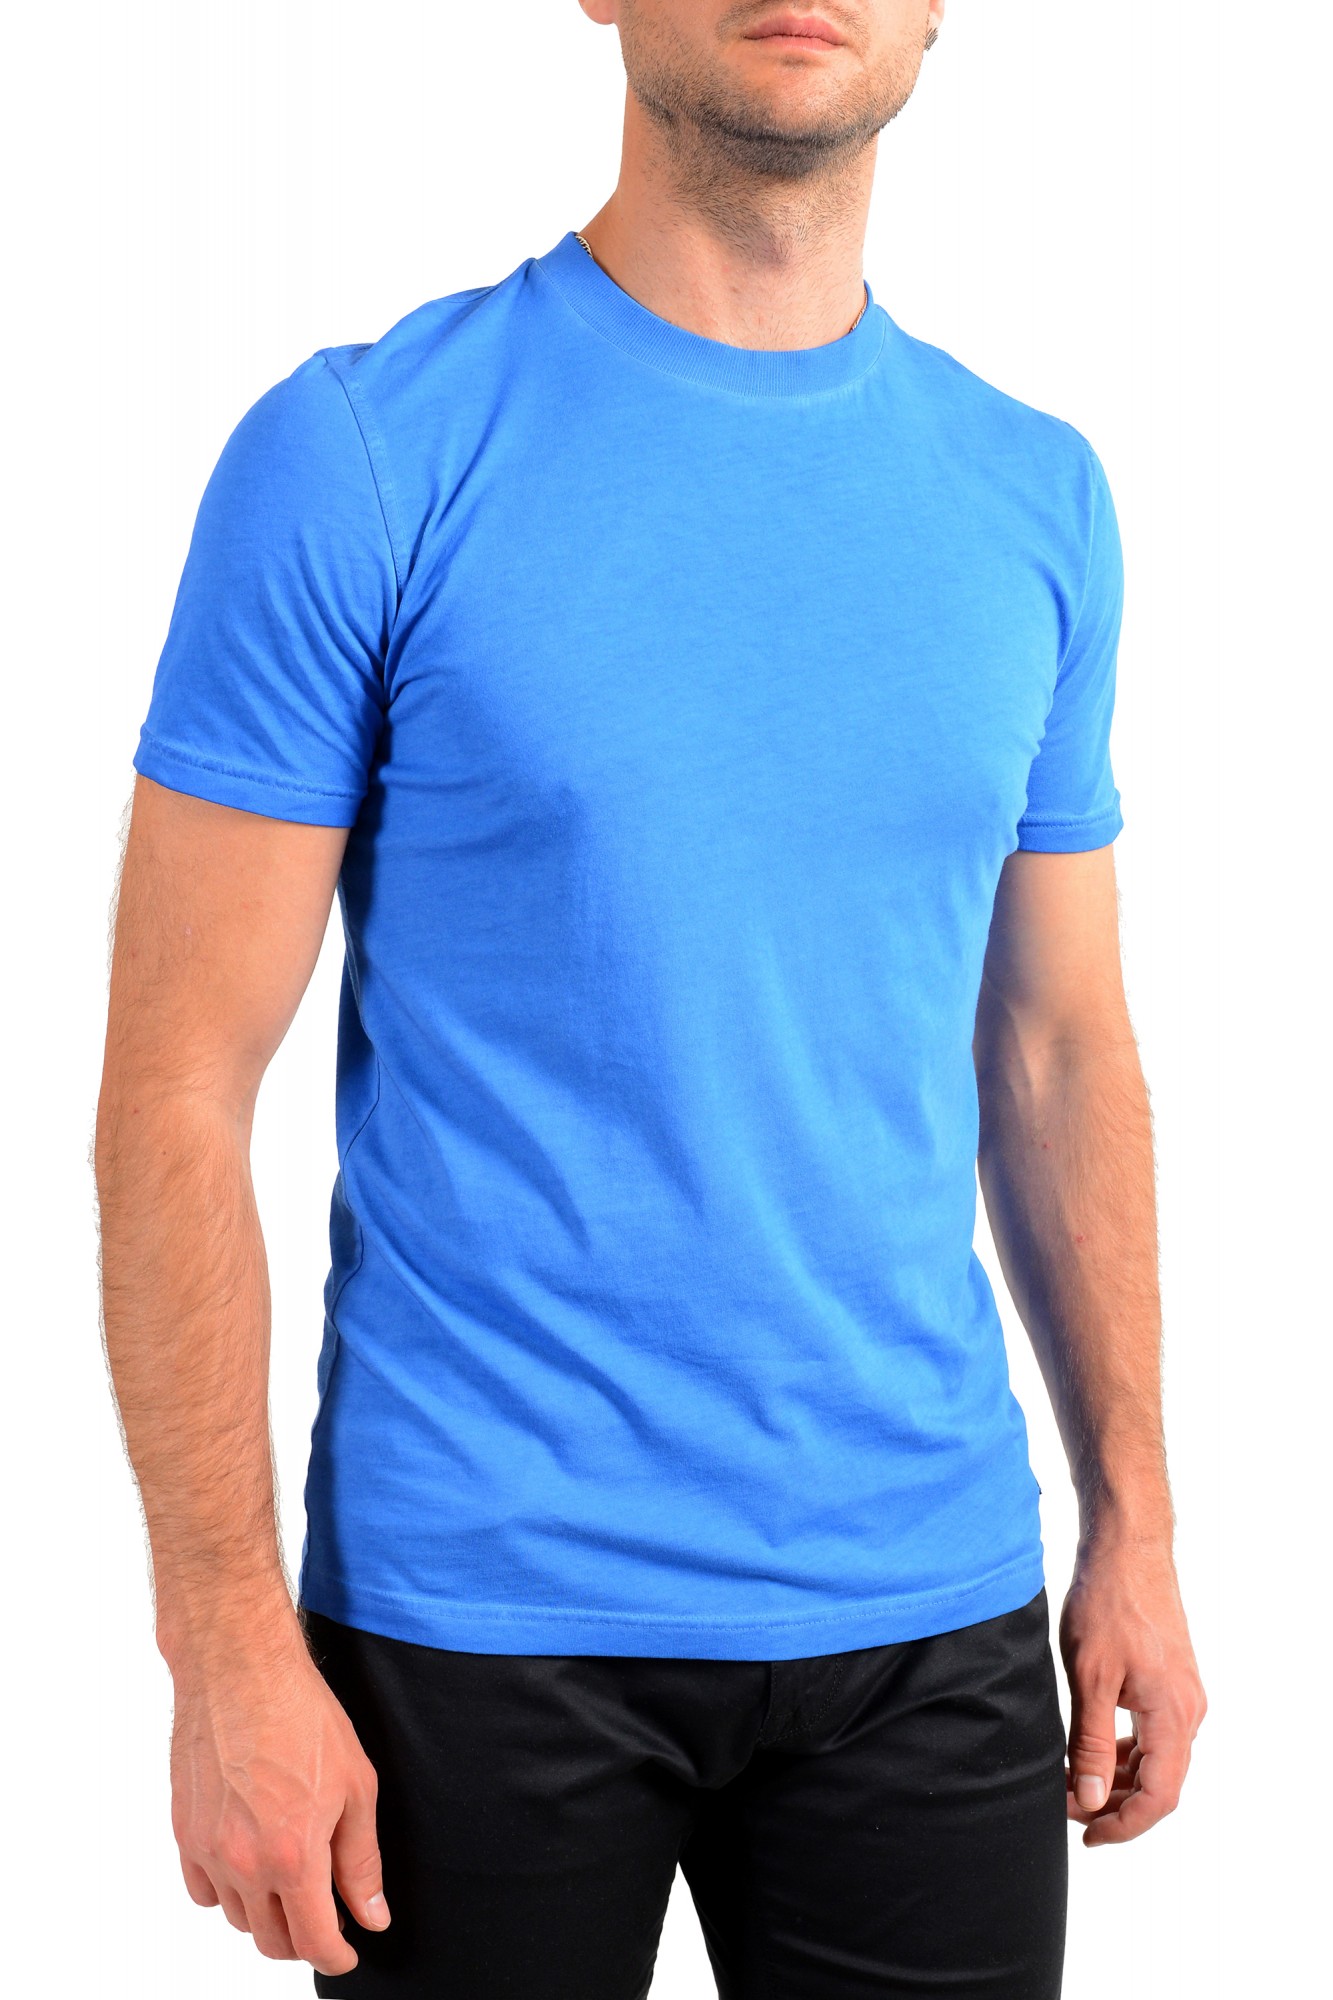 Hugo Boss Junior's J25P13 849 Cotton Boy's T-Shirt Blue Crew Neck Top 